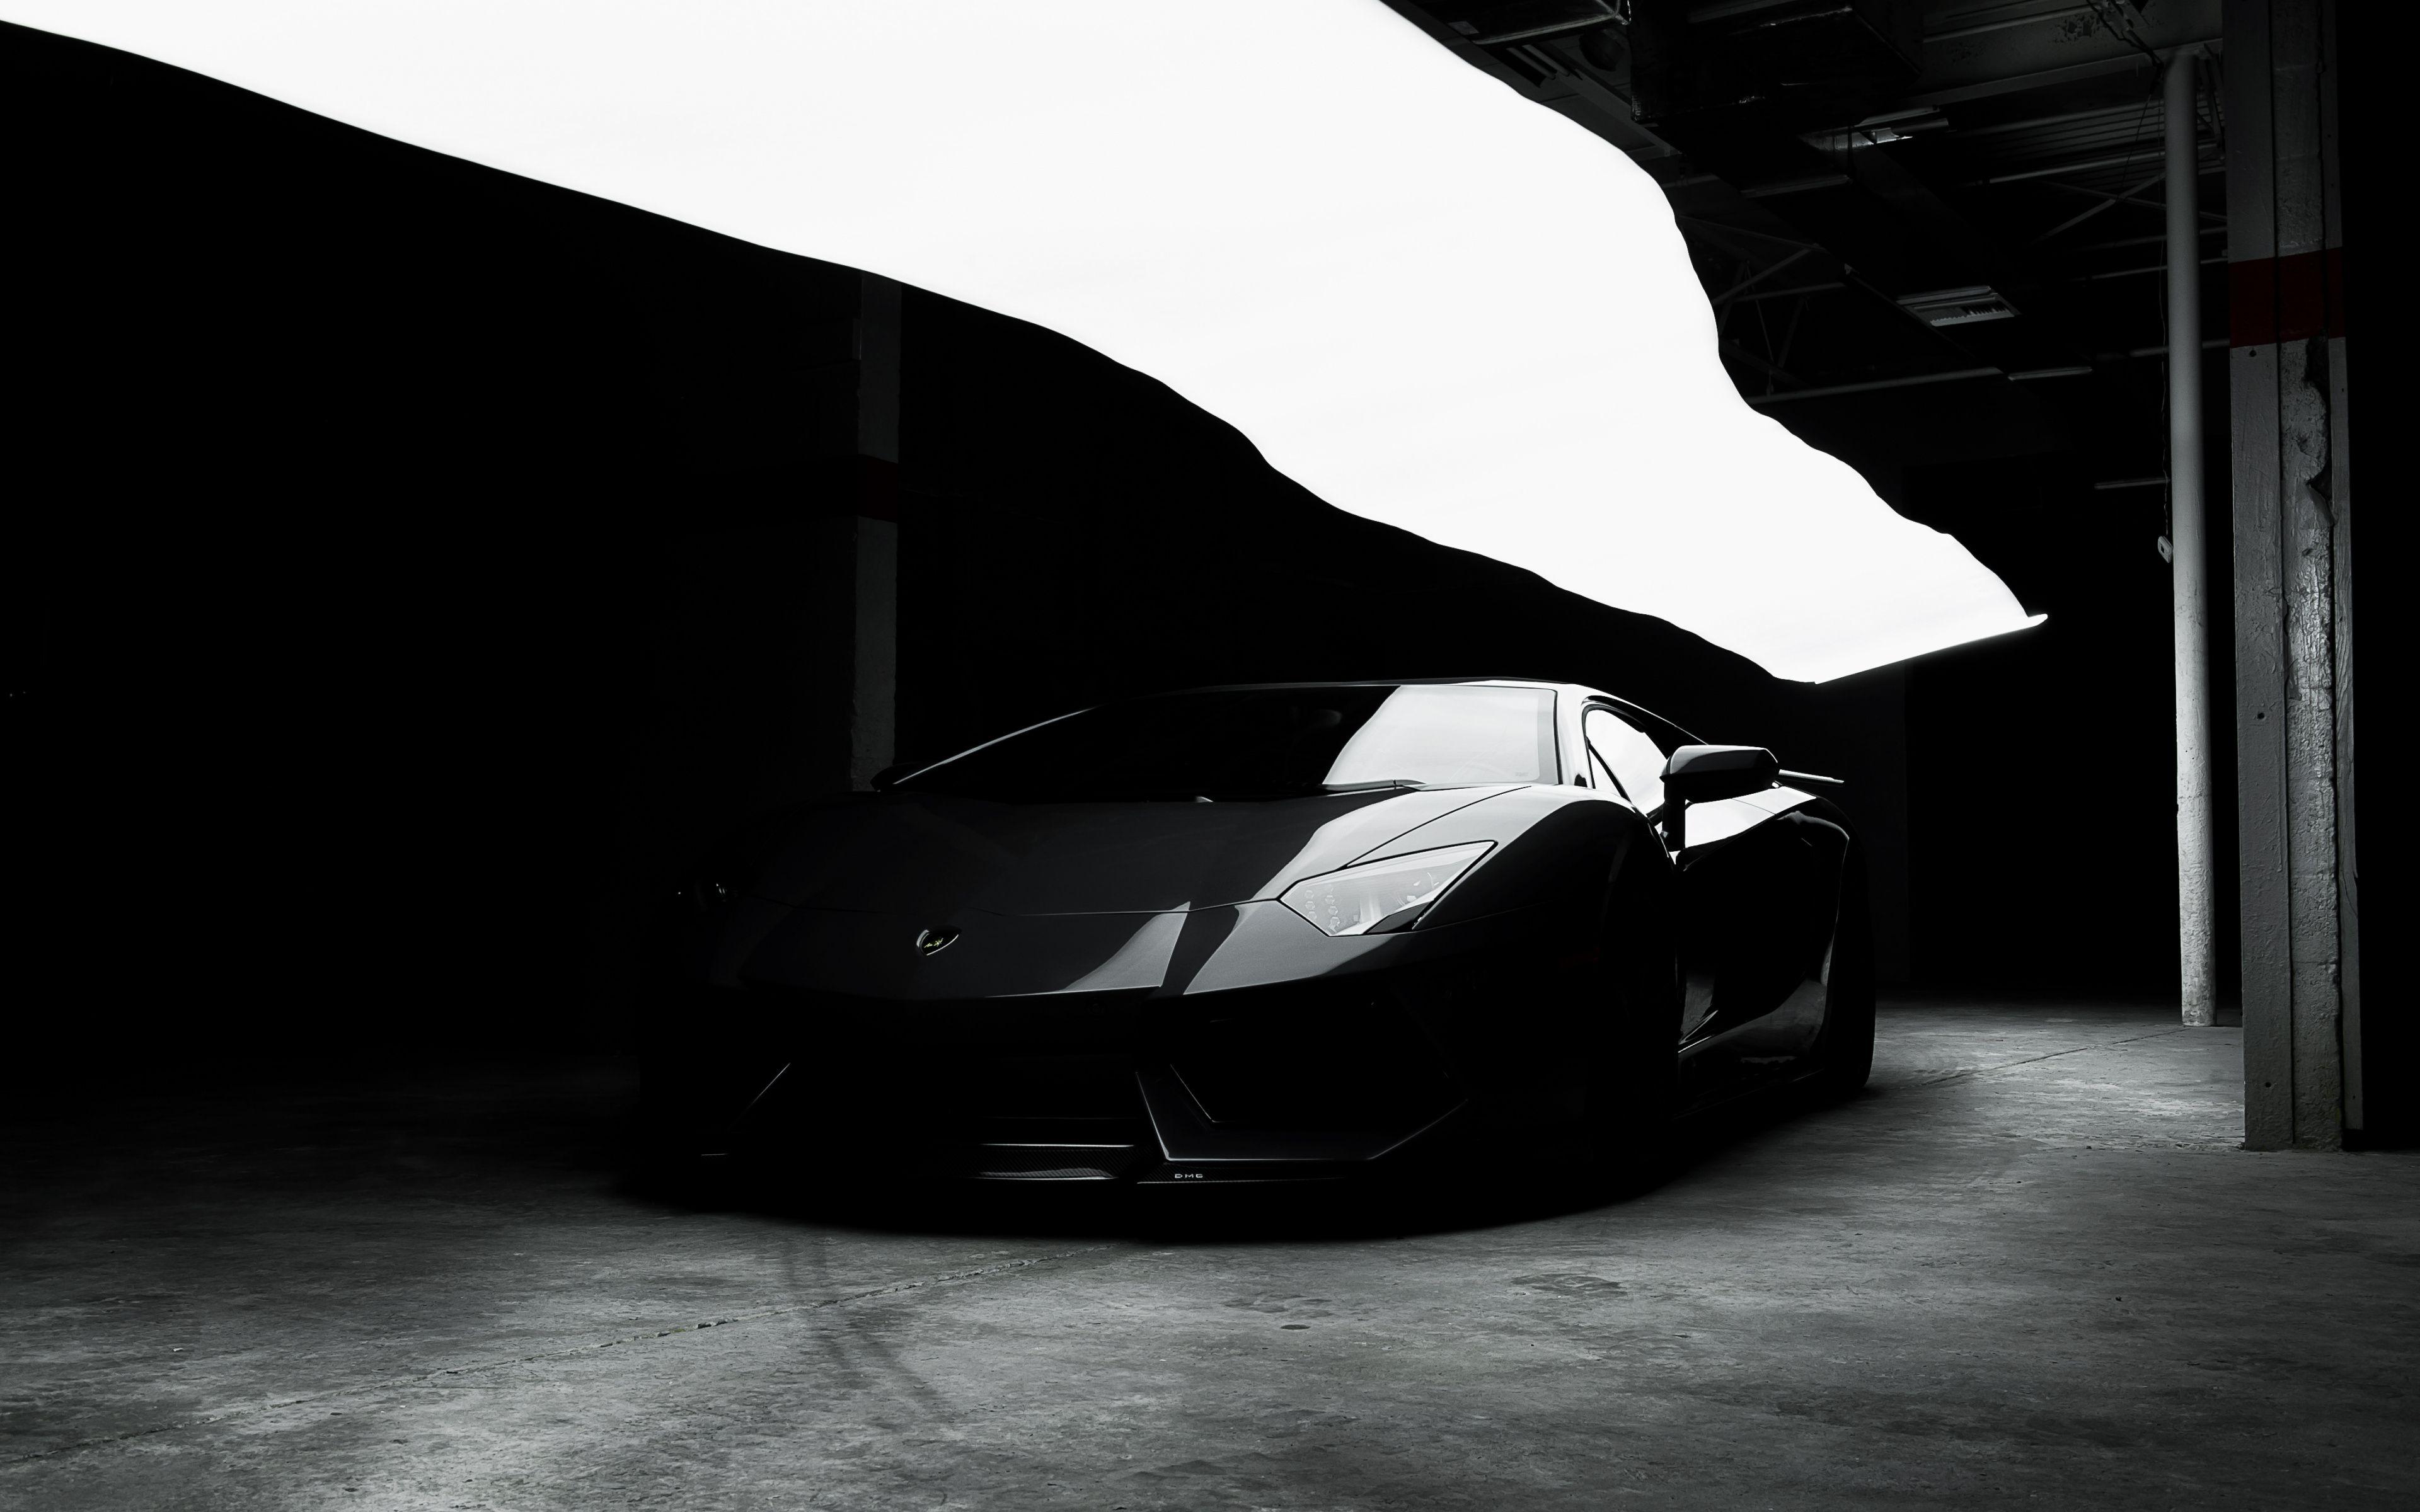 Black Lamborghini Aventador 4k Hd Wallpapers Wallpaper Cave